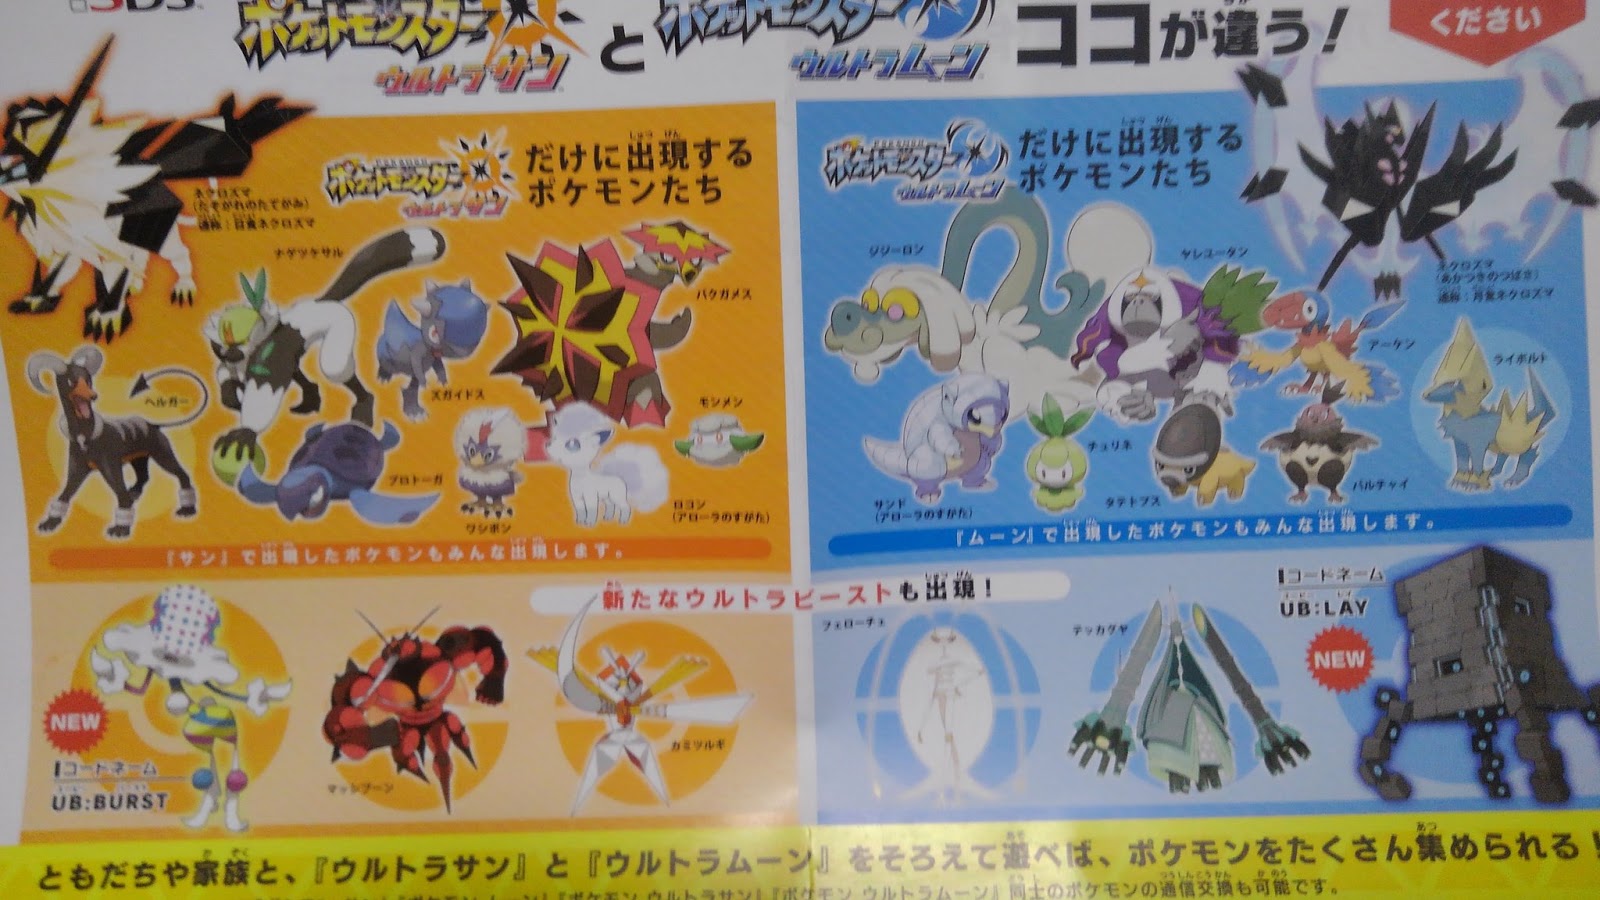 Pokémon Ultra Sun e Moon vai levar você para Ultra Megalopolis